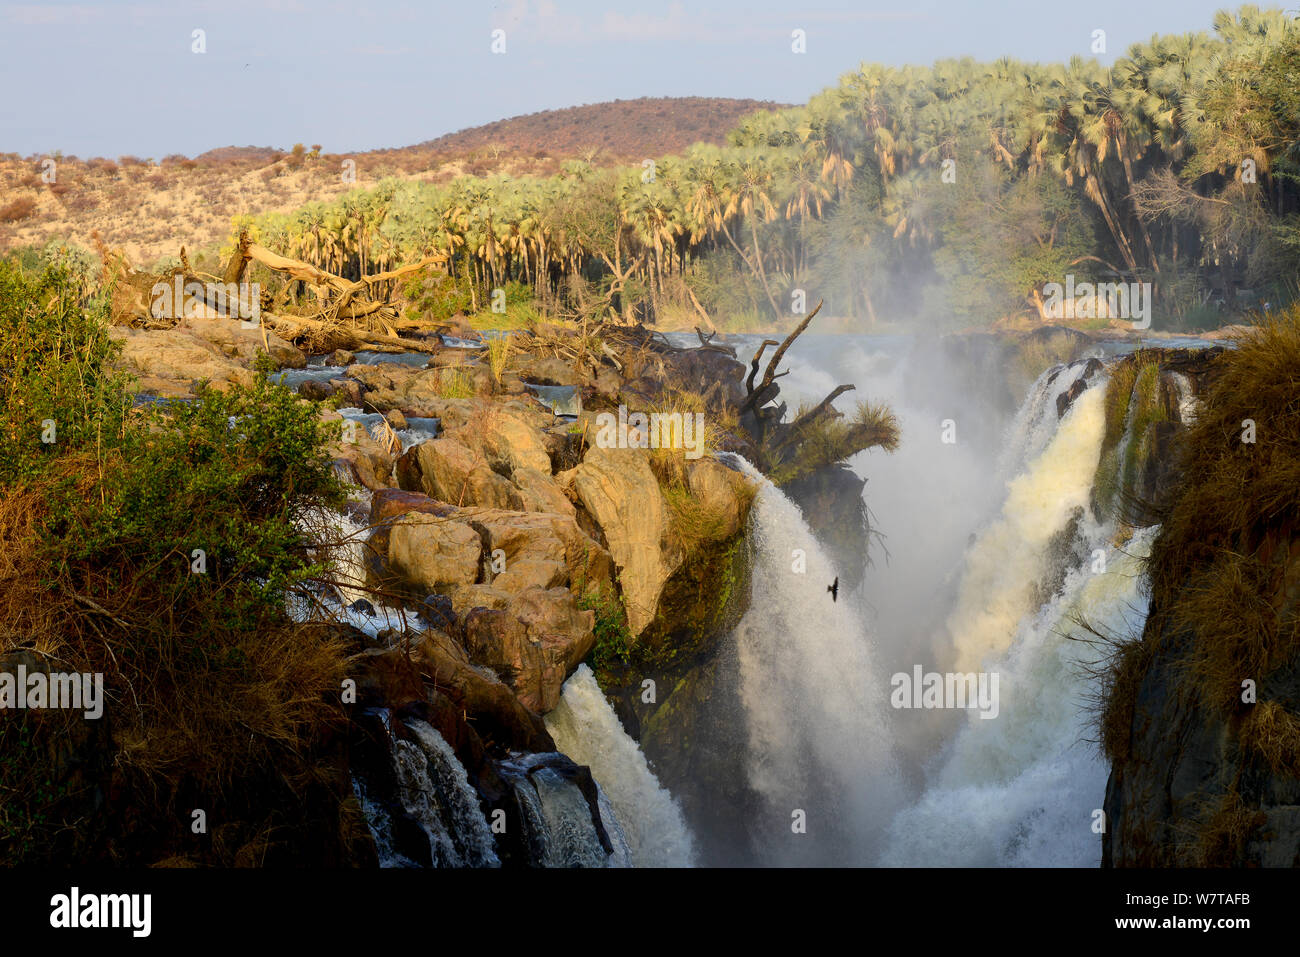 Epupa falls on the Kunene river, on the border between Namibia and Angola. Kaokoland, Namibia, September 2013. Stock Photo